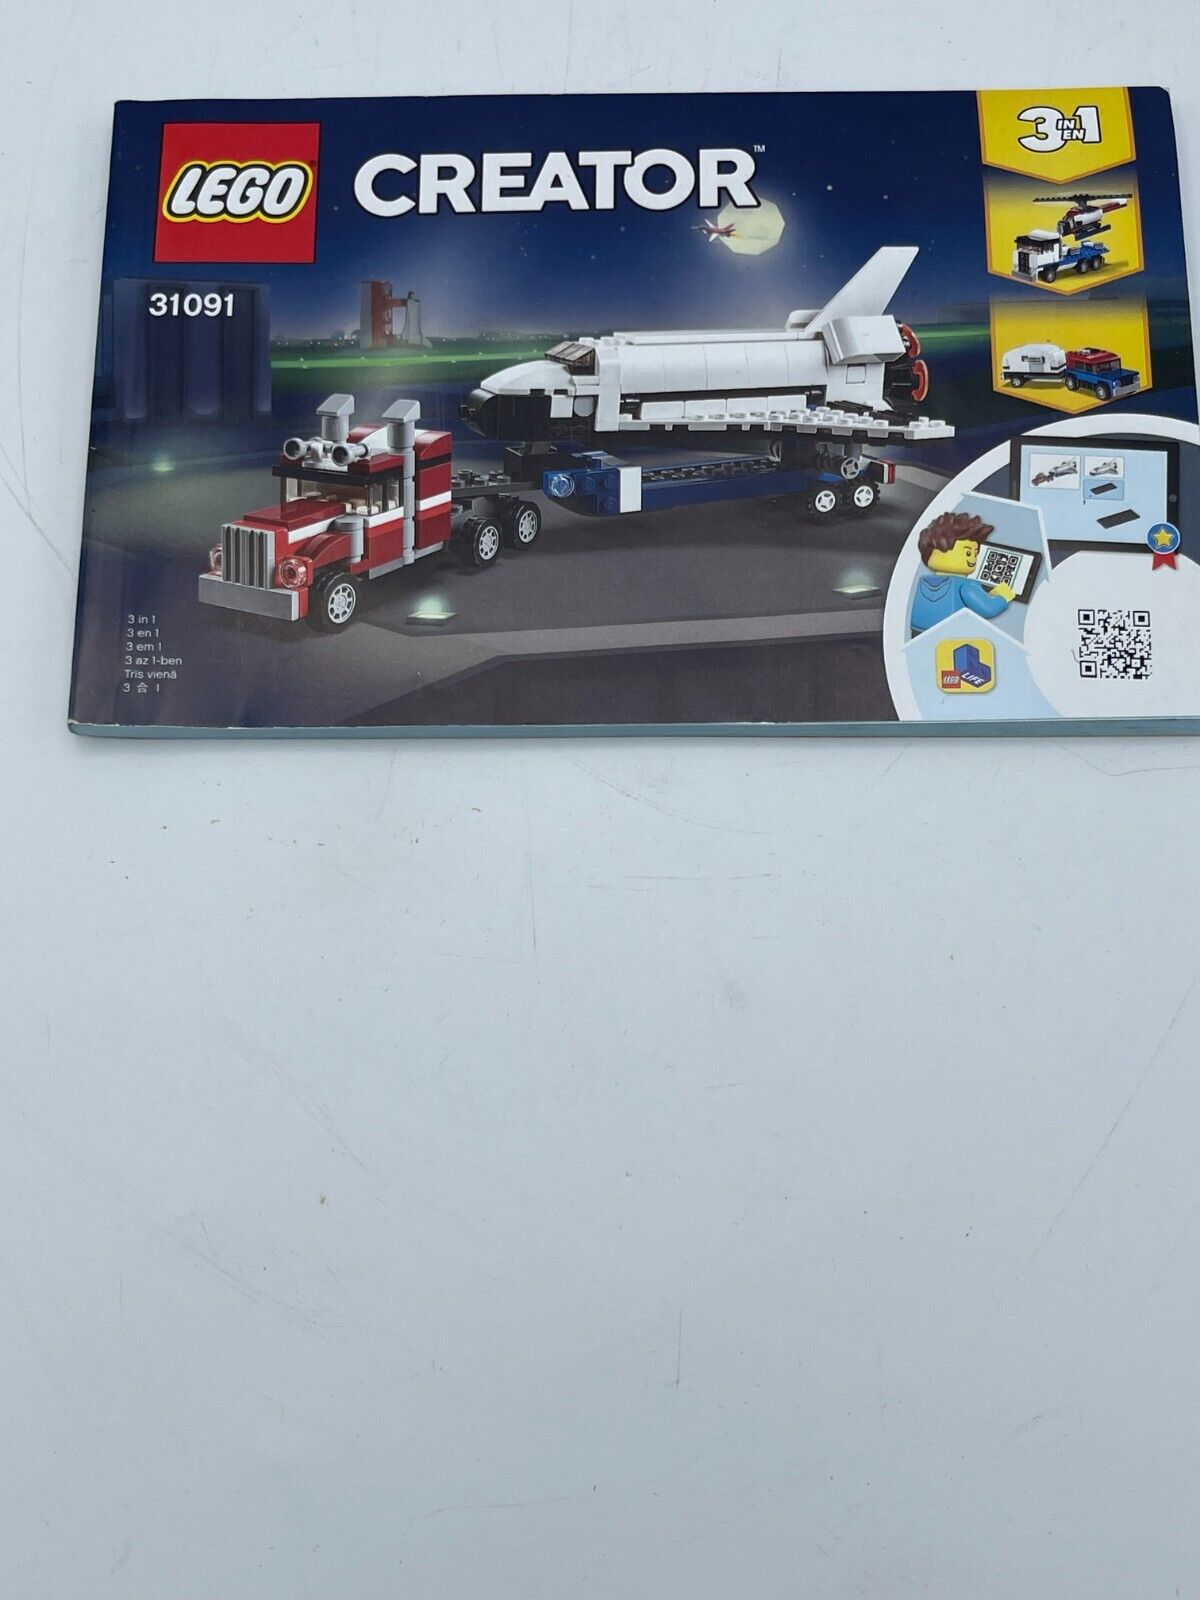 Lego Creator 31091 Manual Instruction Booklet Space Shuttle Rocket